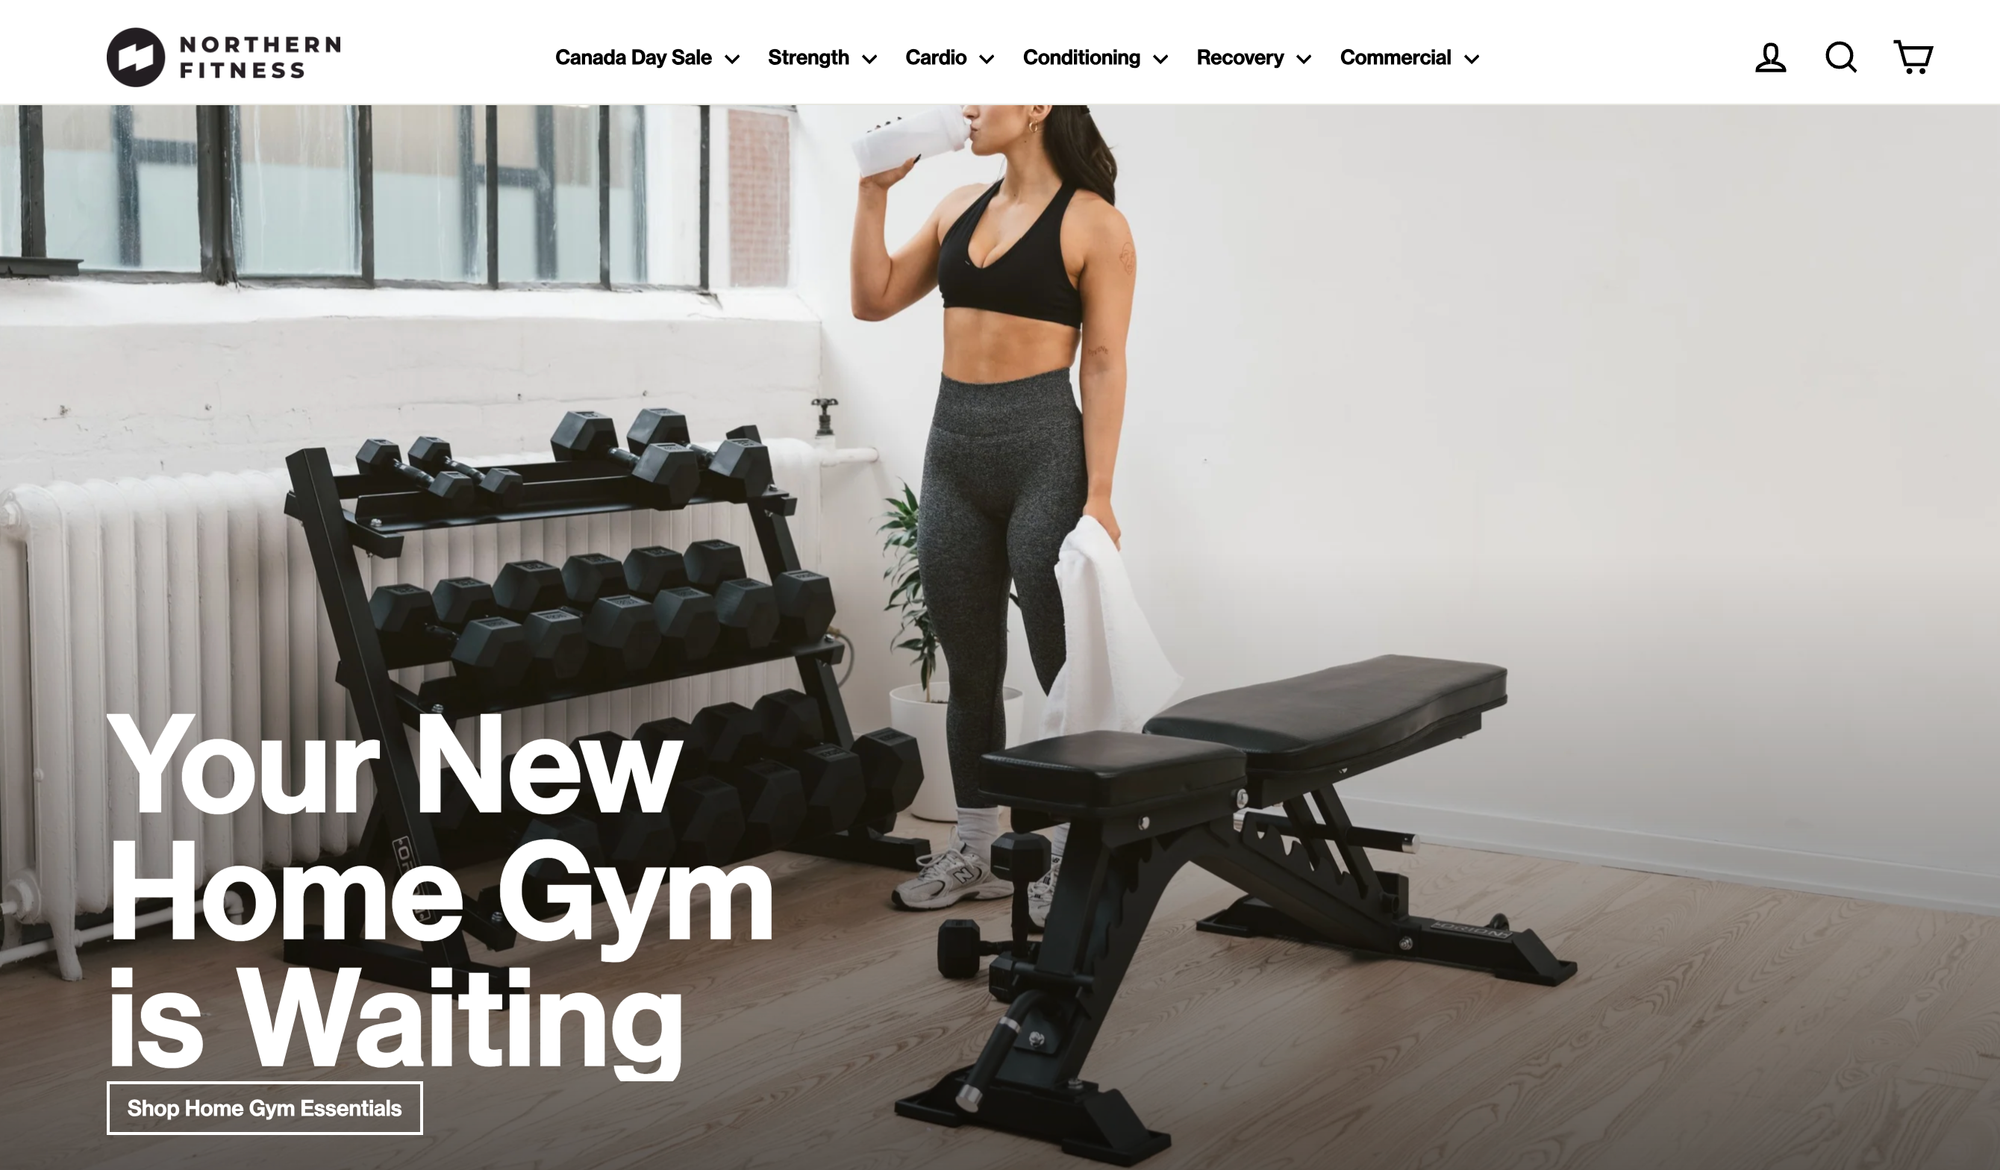 Northern Fitness website